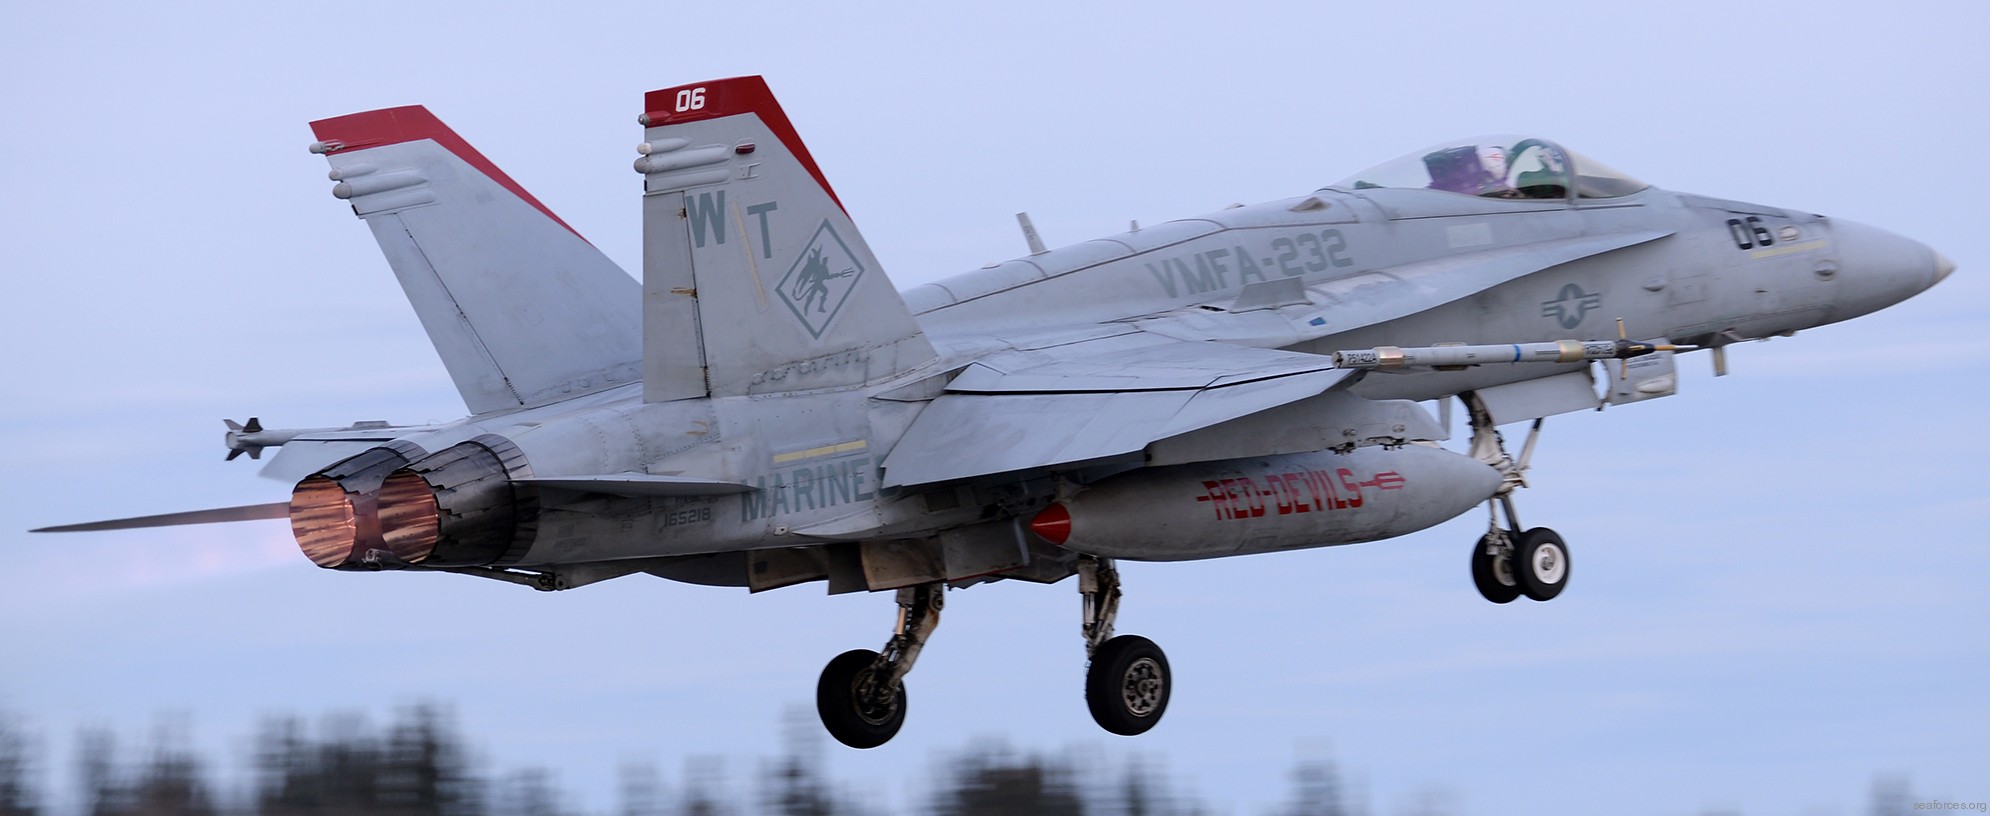 vmfa-232 red devils marine fighter attack squadron usmc f/a-18c hornet 117 exercise red flag alaska rfa